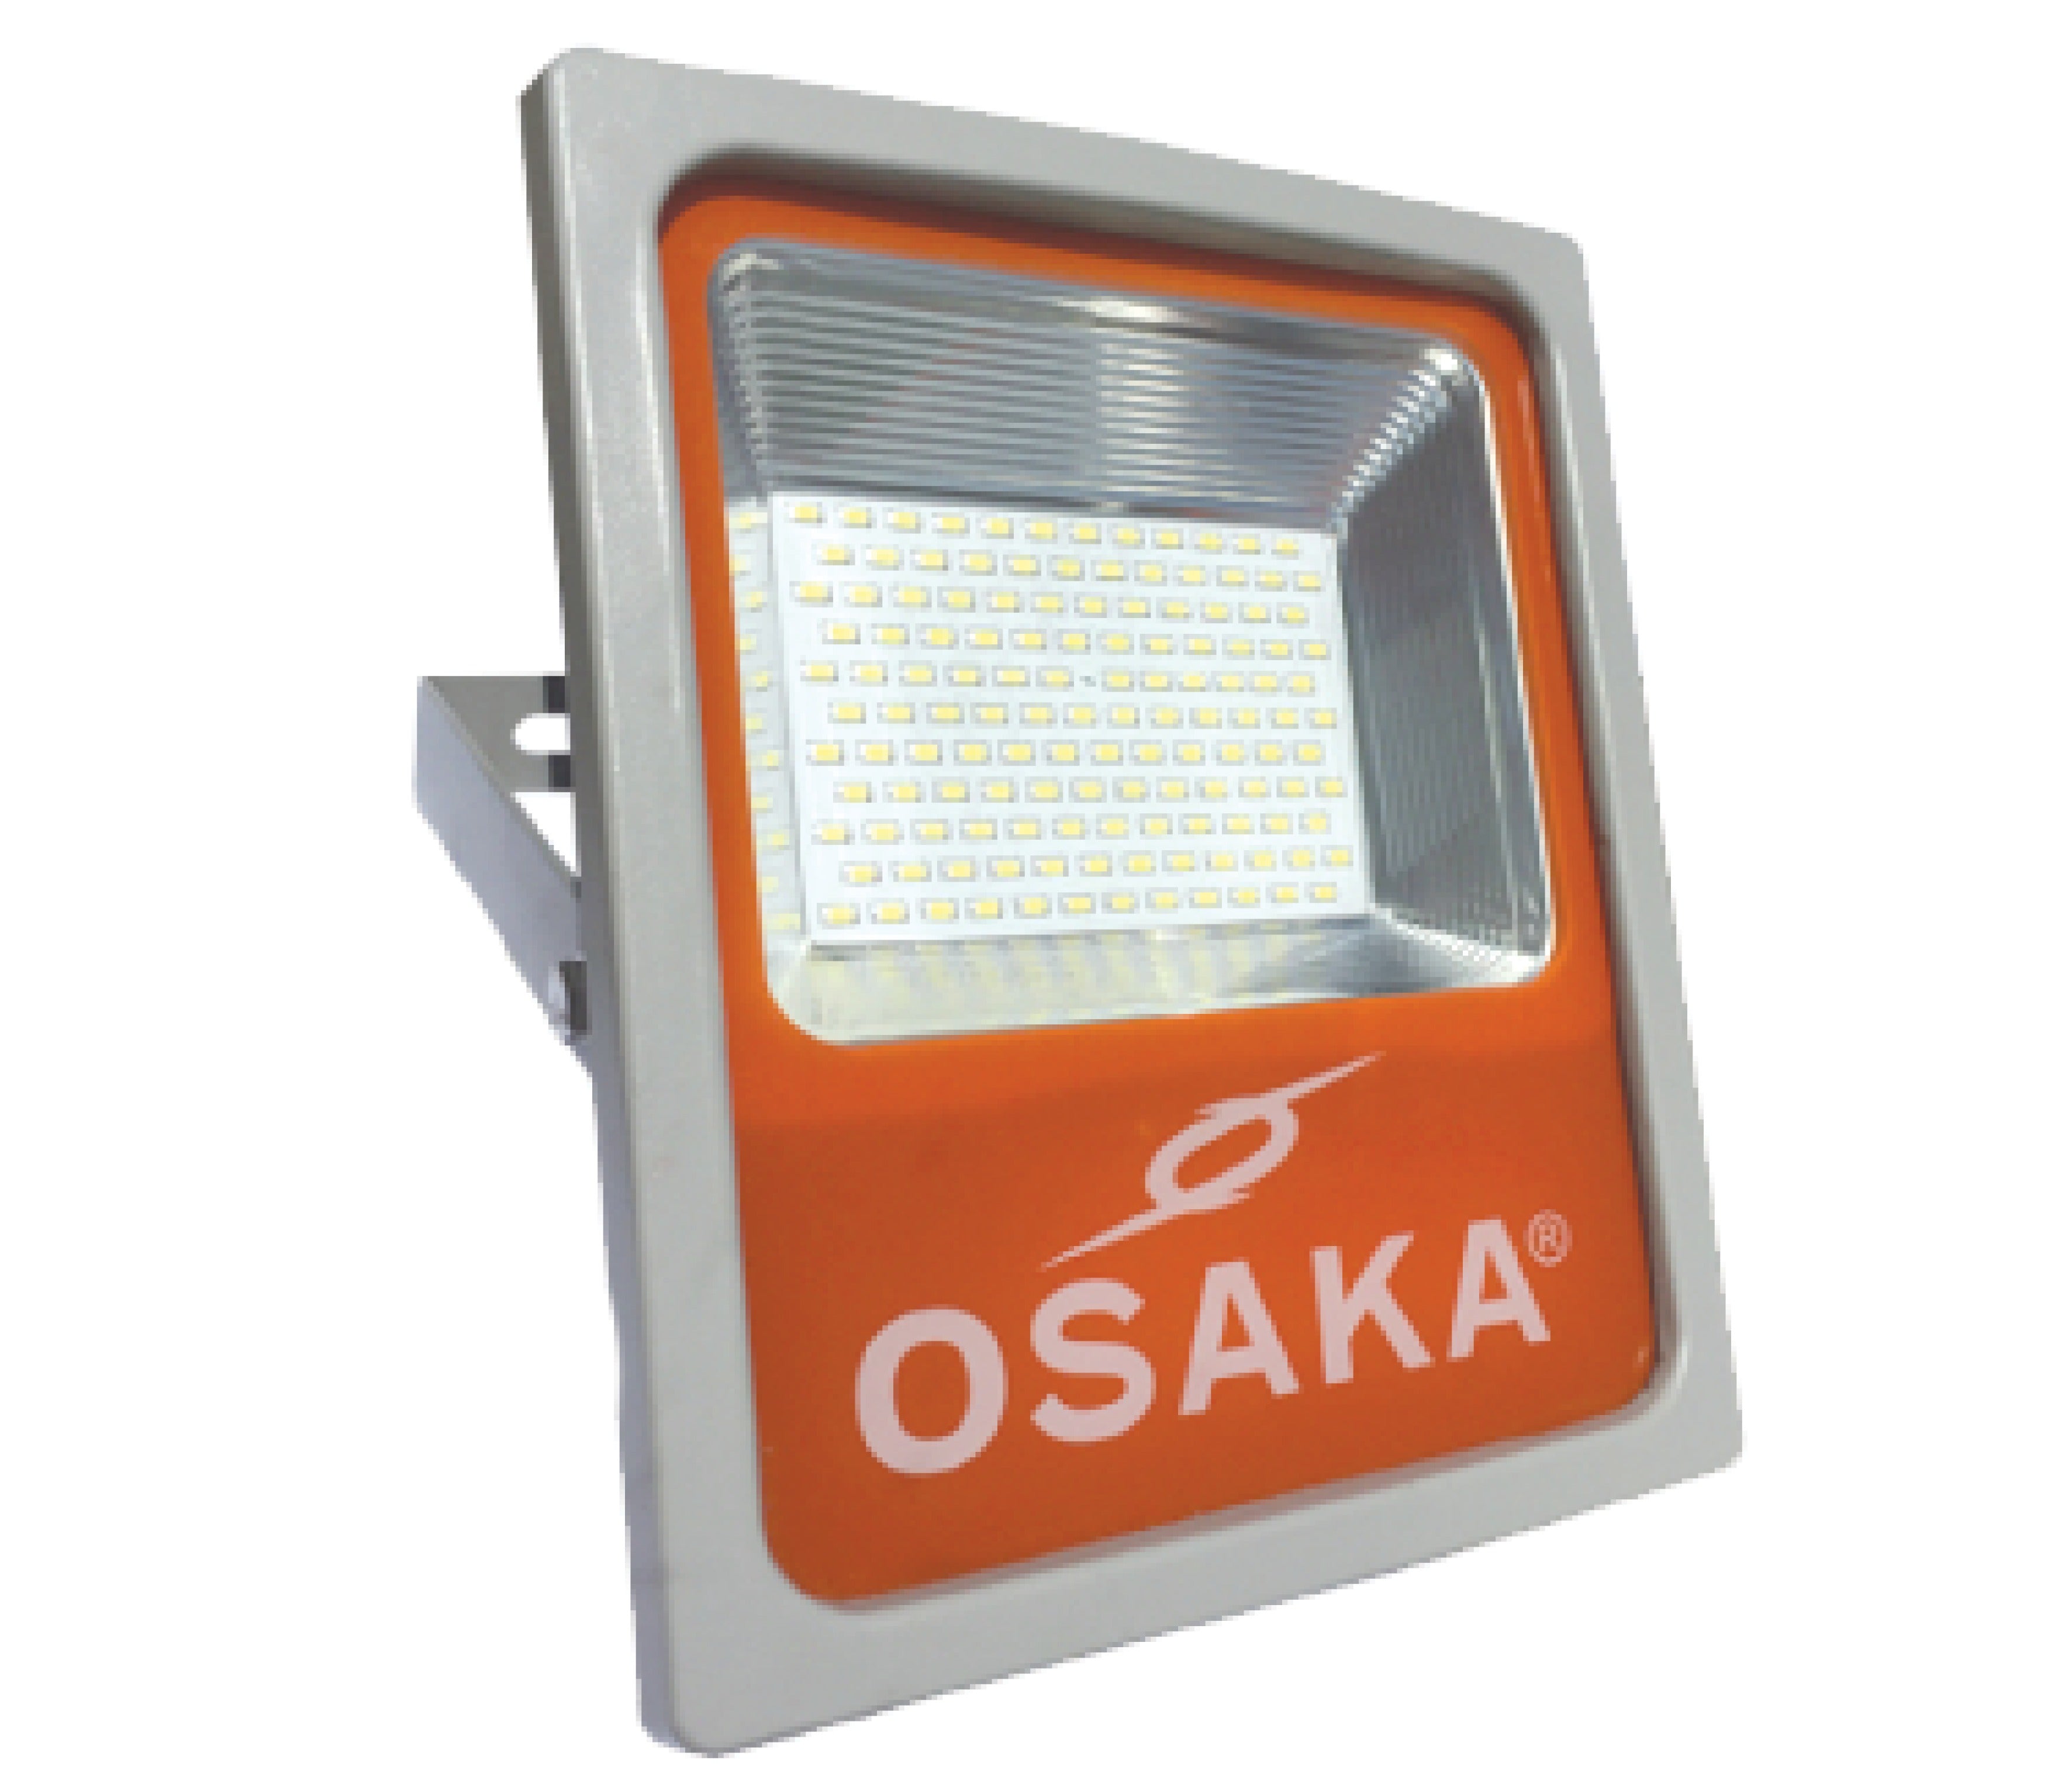 Osaka LED Flood Light 10W Price in Pakistan